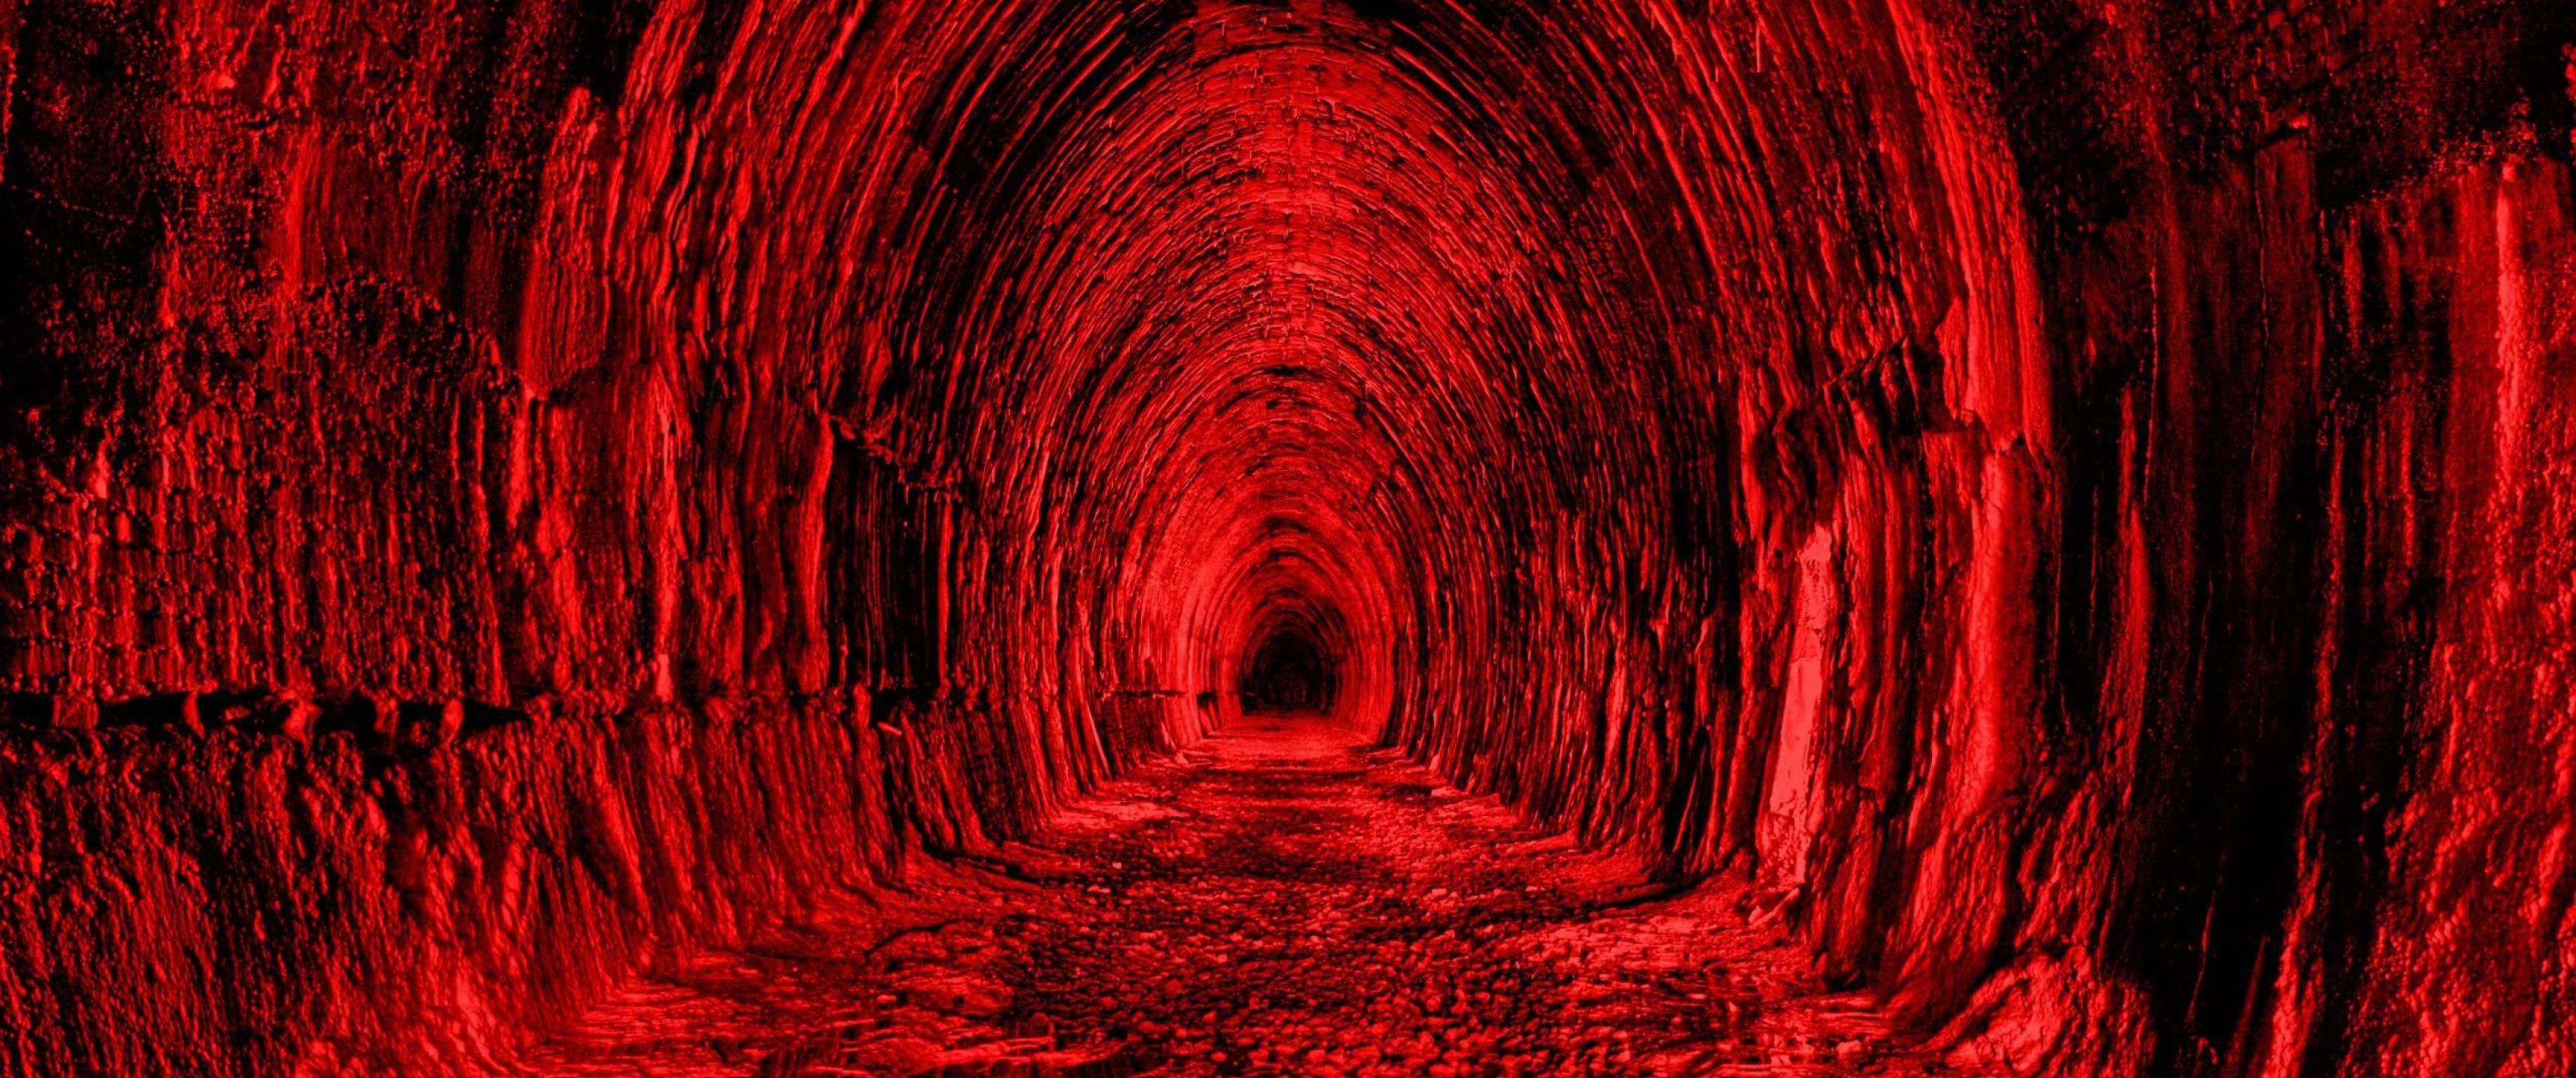 3440x1440 Hintergrundbild 3440x1440. Red Aesthetic Tunnel 3440x1440 Resolution Wallpaper, HD Artist 4K Wallpaper, Image, Photo and Background